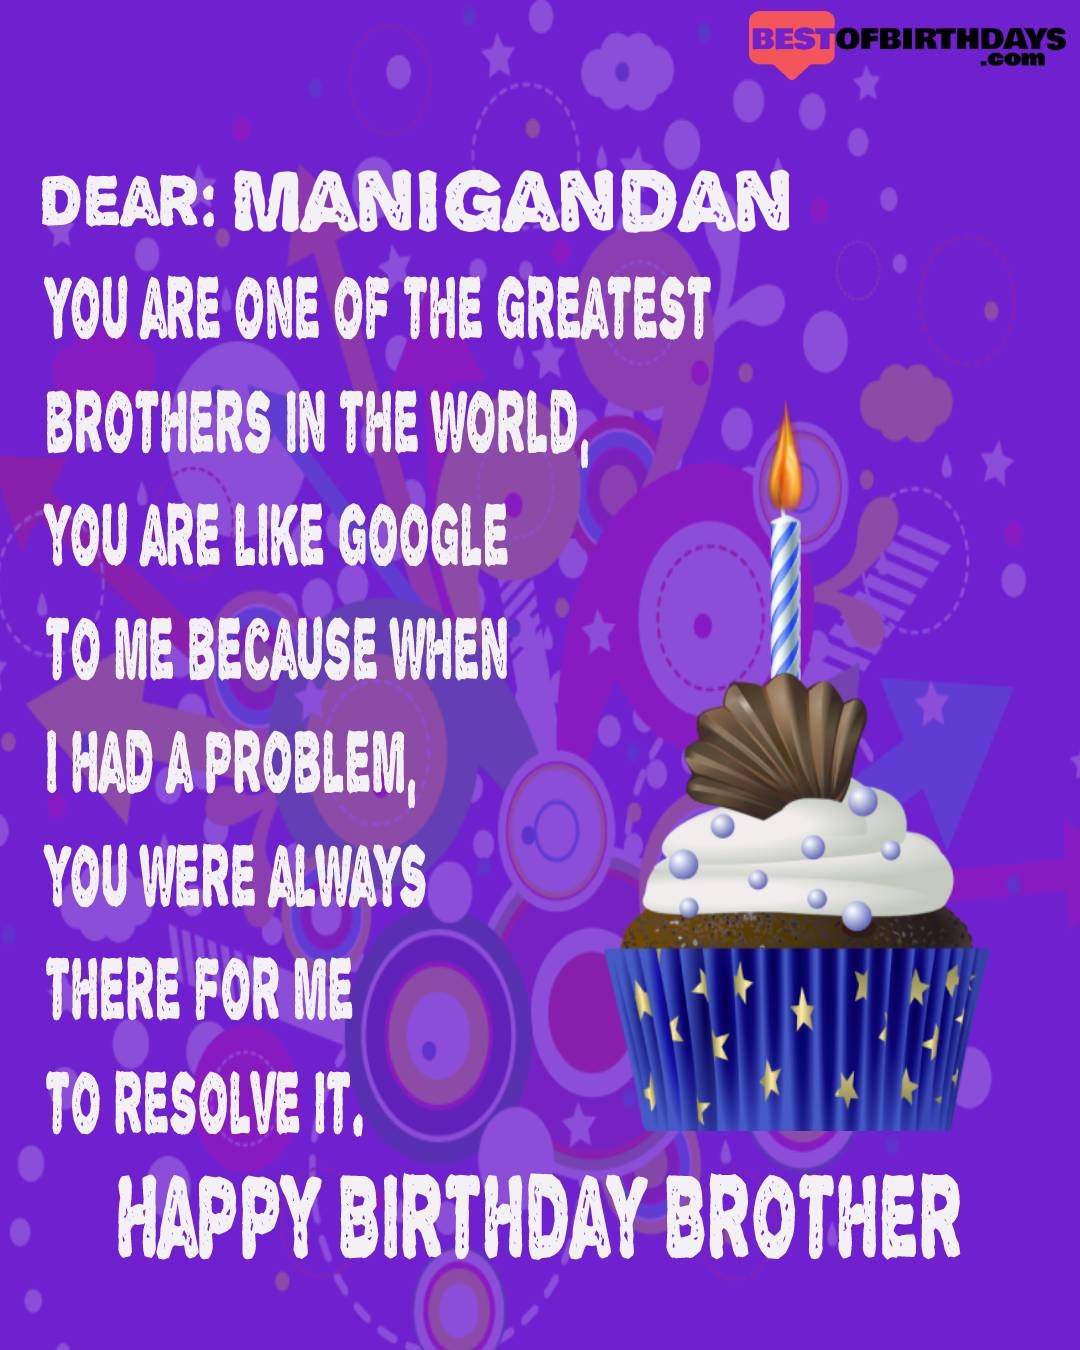 Happy birthday manigandan bhai brother bro